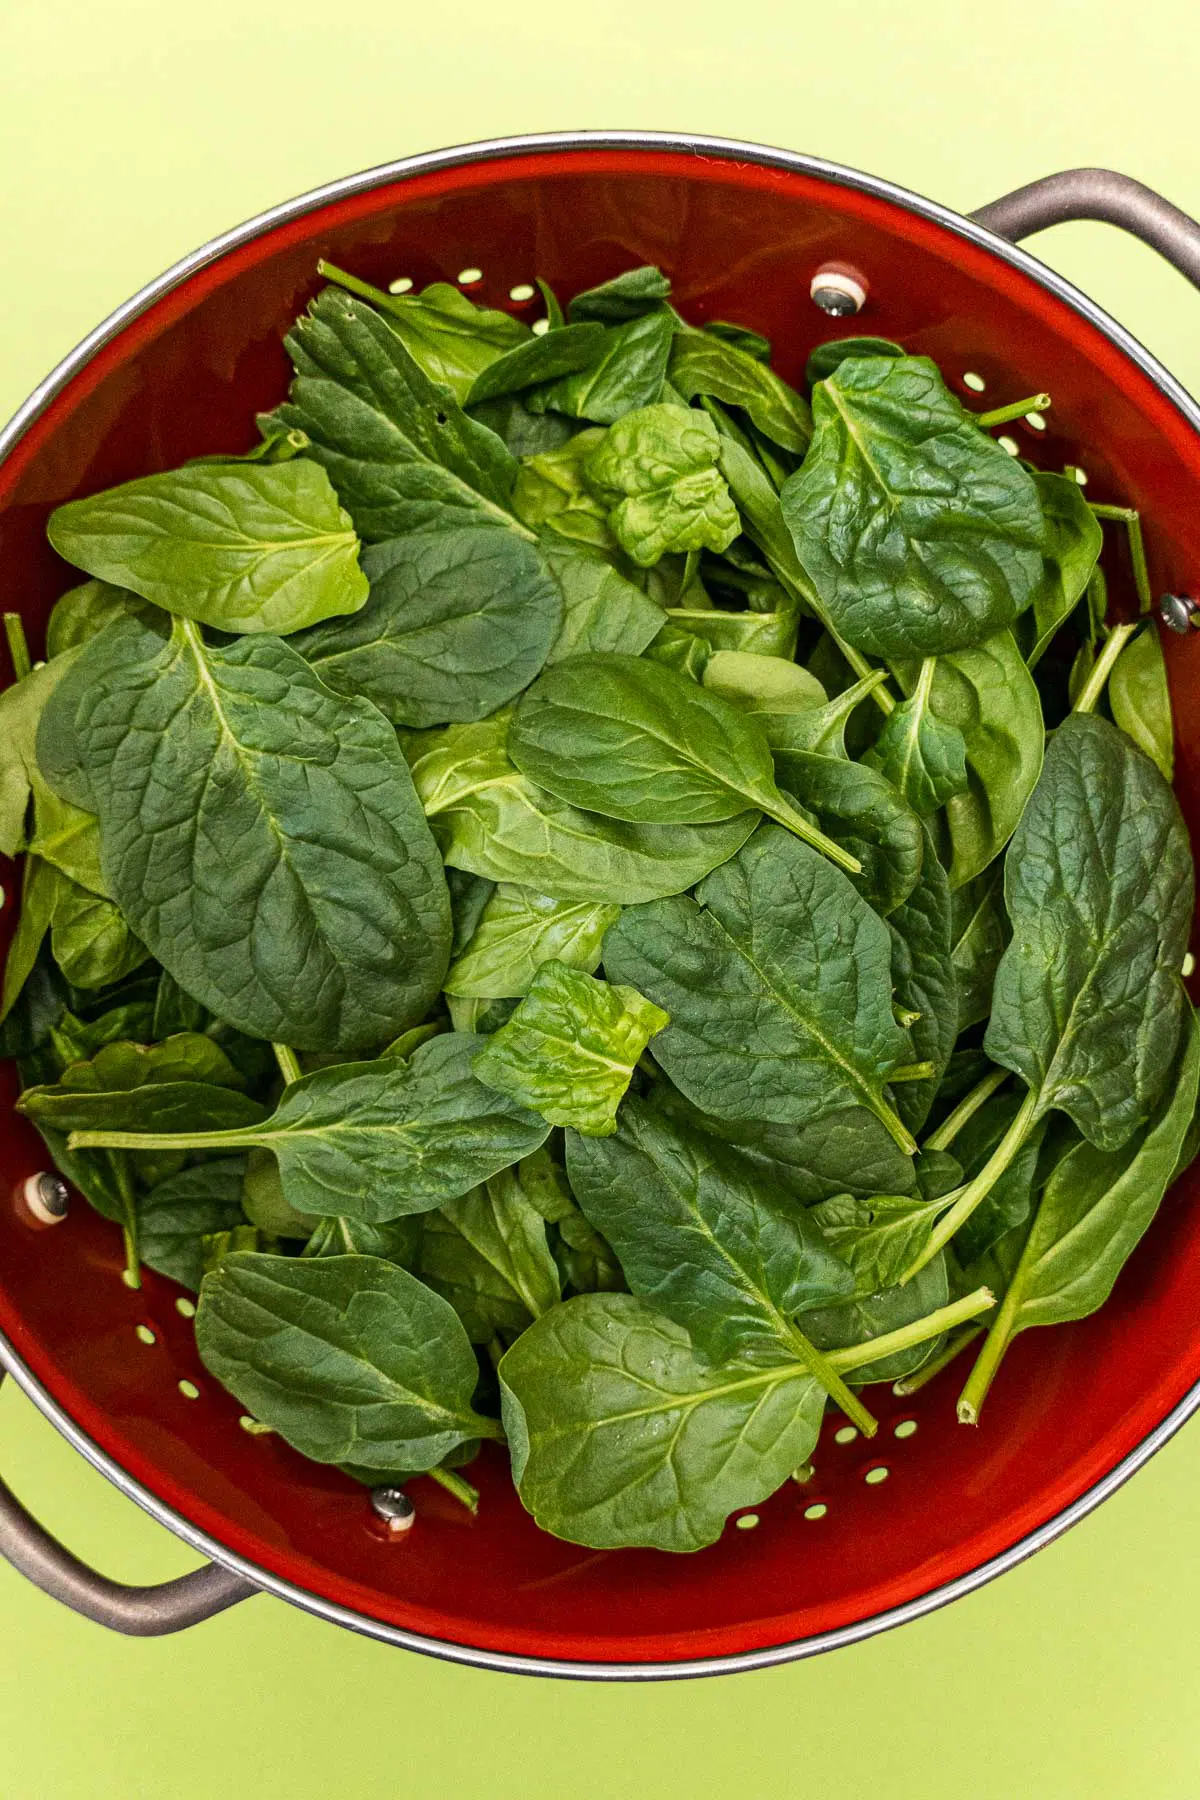 Spinach in a red colander